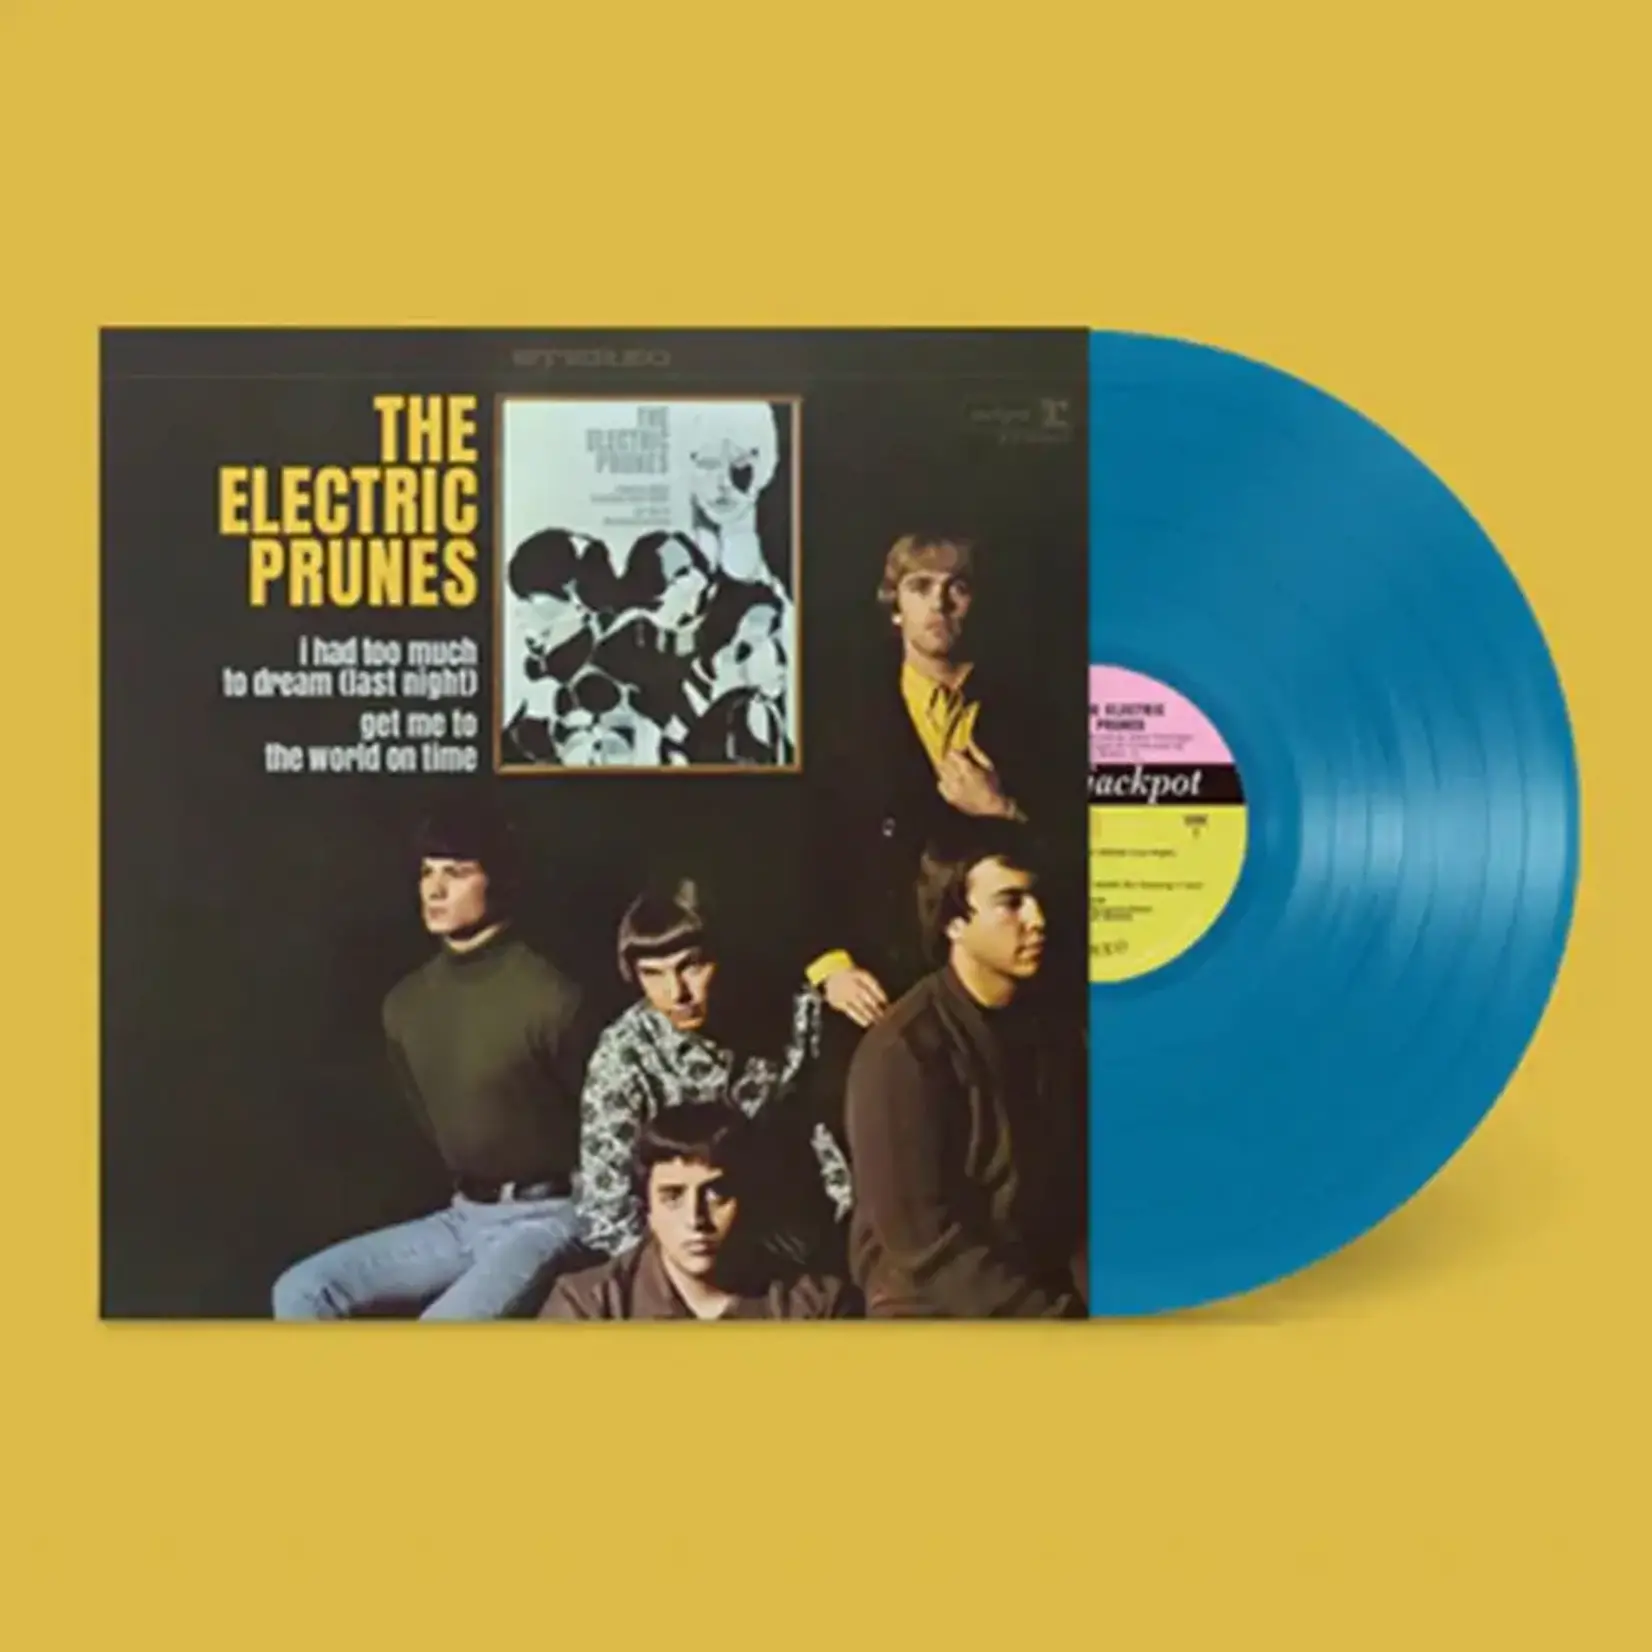 [New] Electric Prunes - The Electric Prunes (blue vinyl)